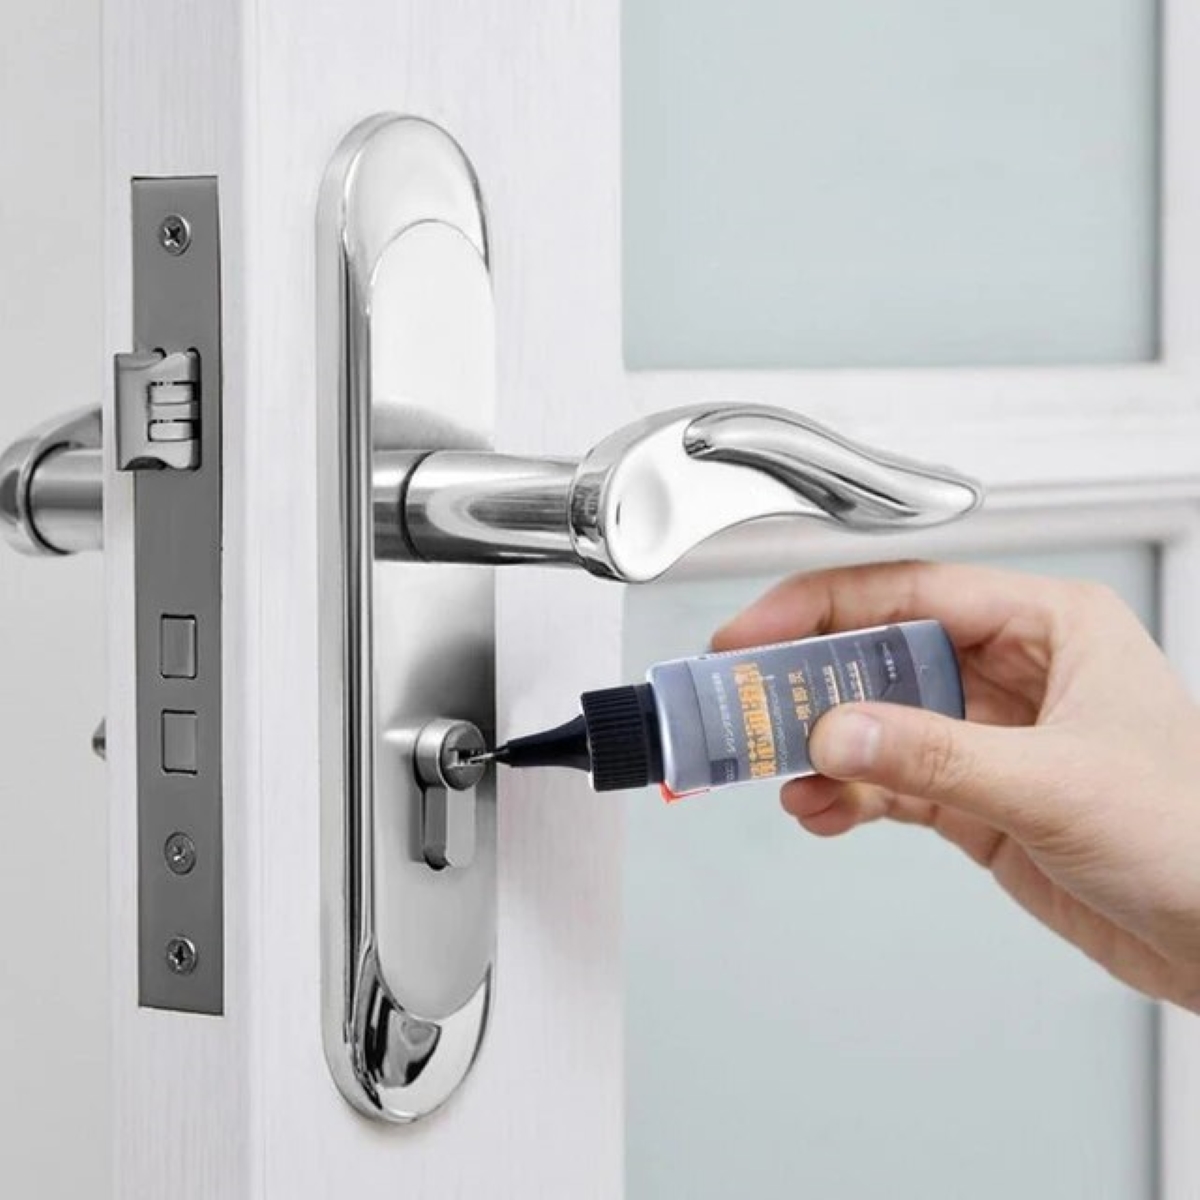 Using small lubricate to door knob.